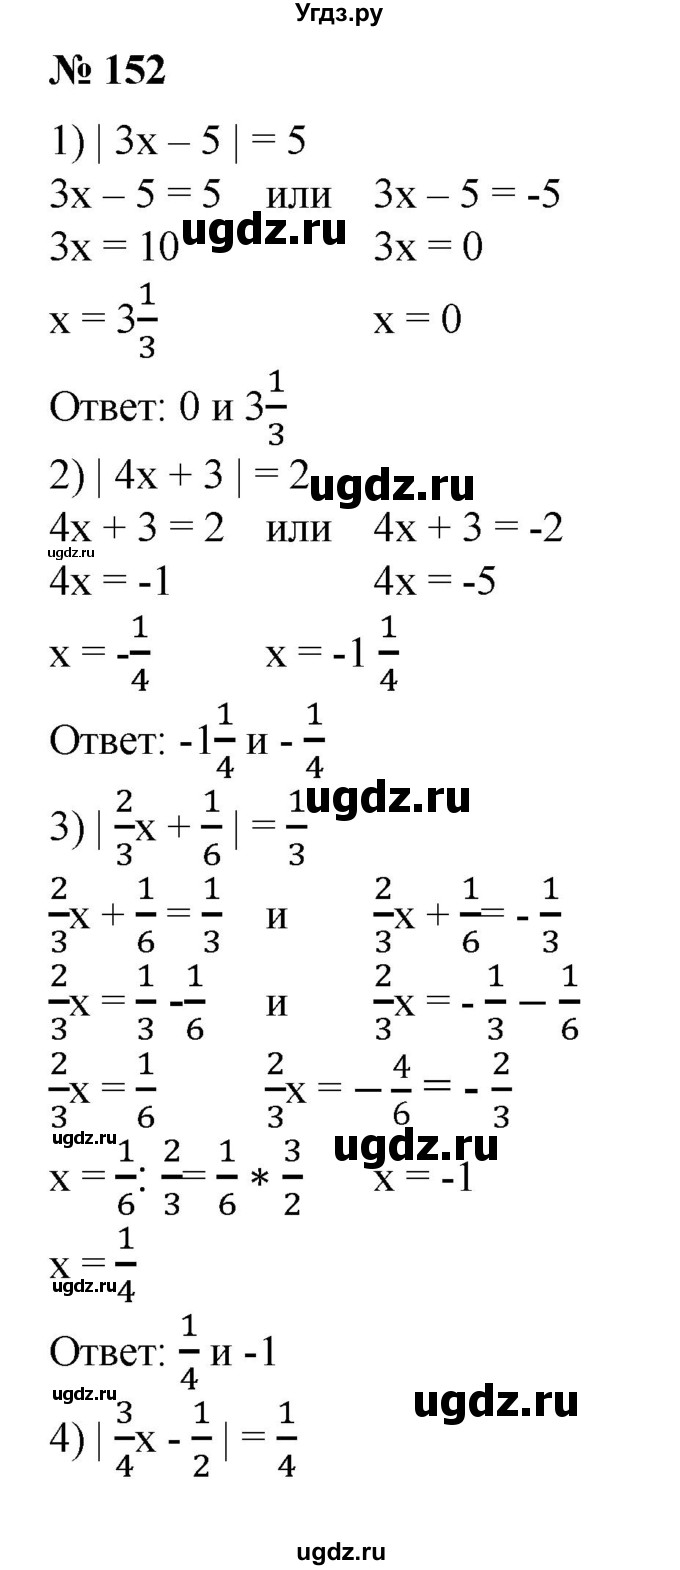 152. 1) |Зх - 5|	= 5;
2) |4х + 3| = 2;
3) |2/3x +1/6| = 1/3;
4) |3/4 x – 1/2| = 1/4.